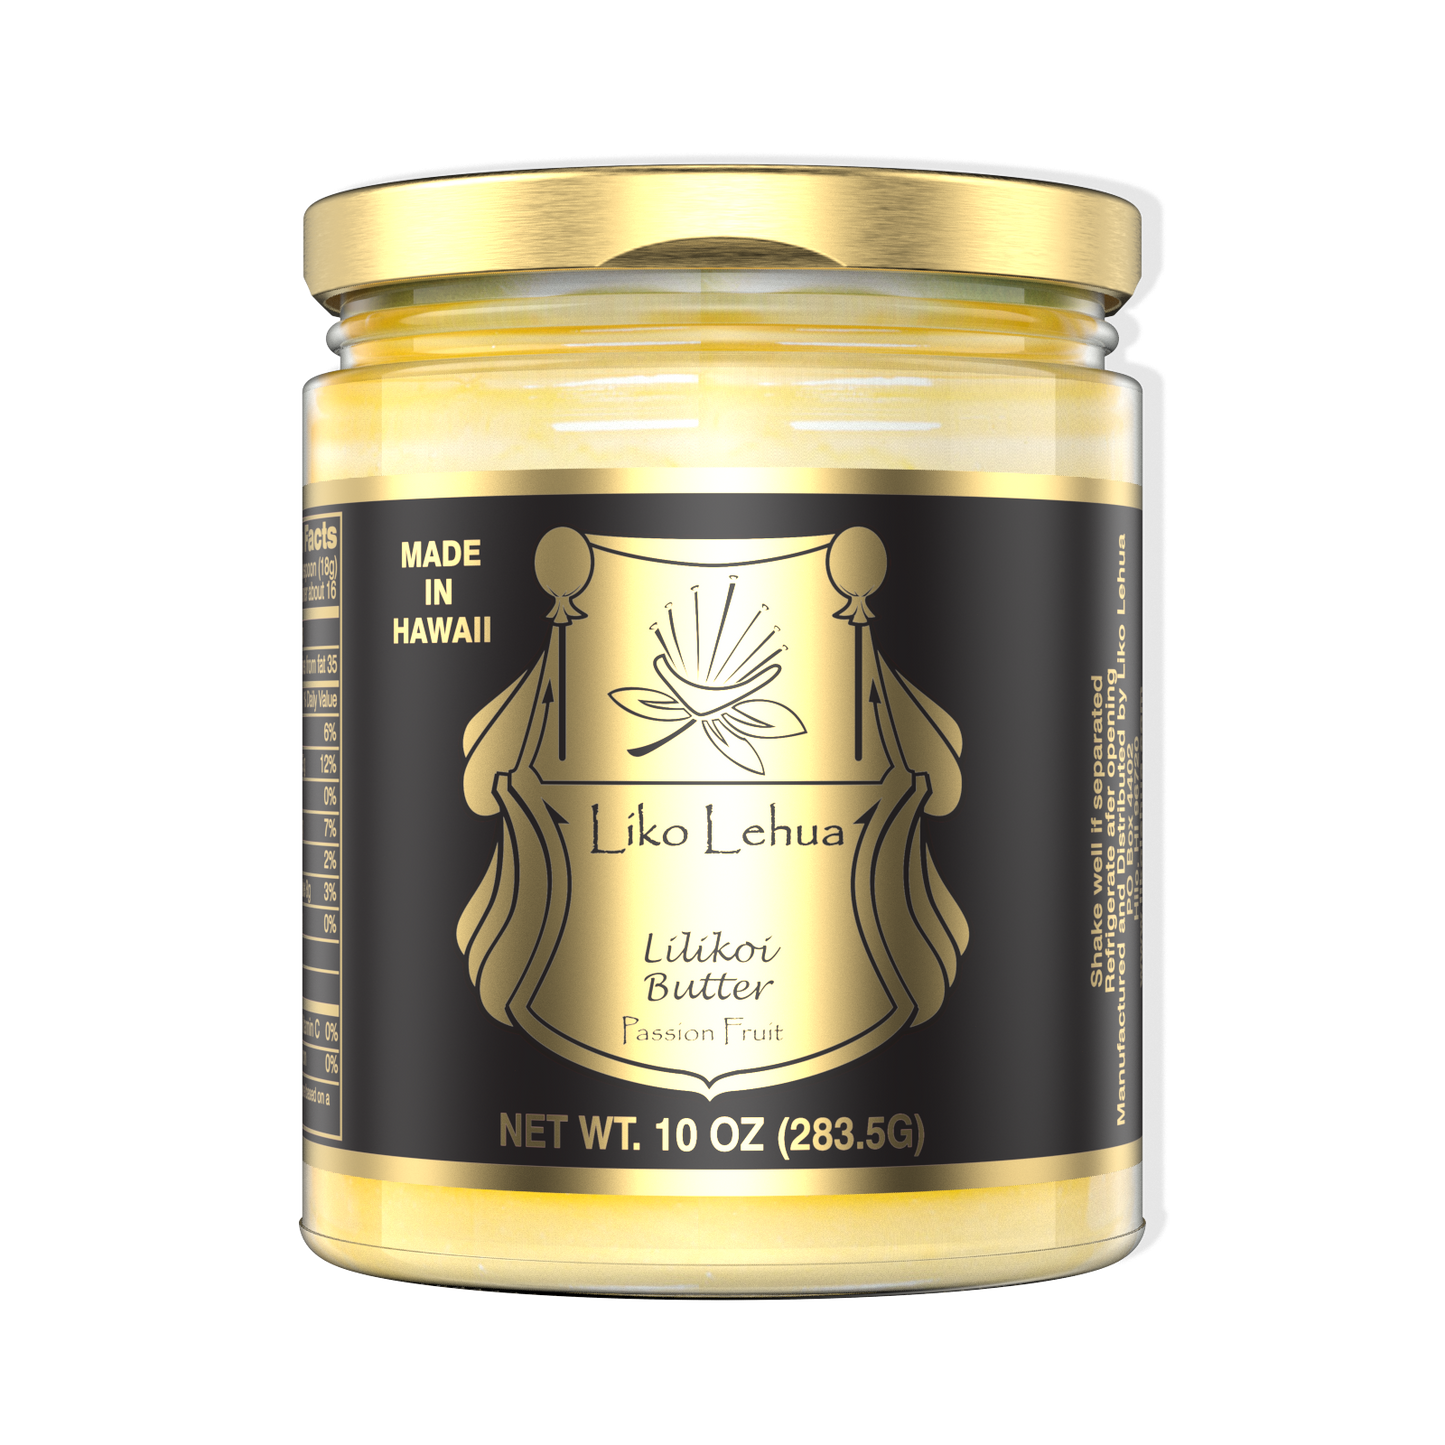 Lilikoi Butter (Passion Fruit Butter) - Liko Lehua Fruit Butter